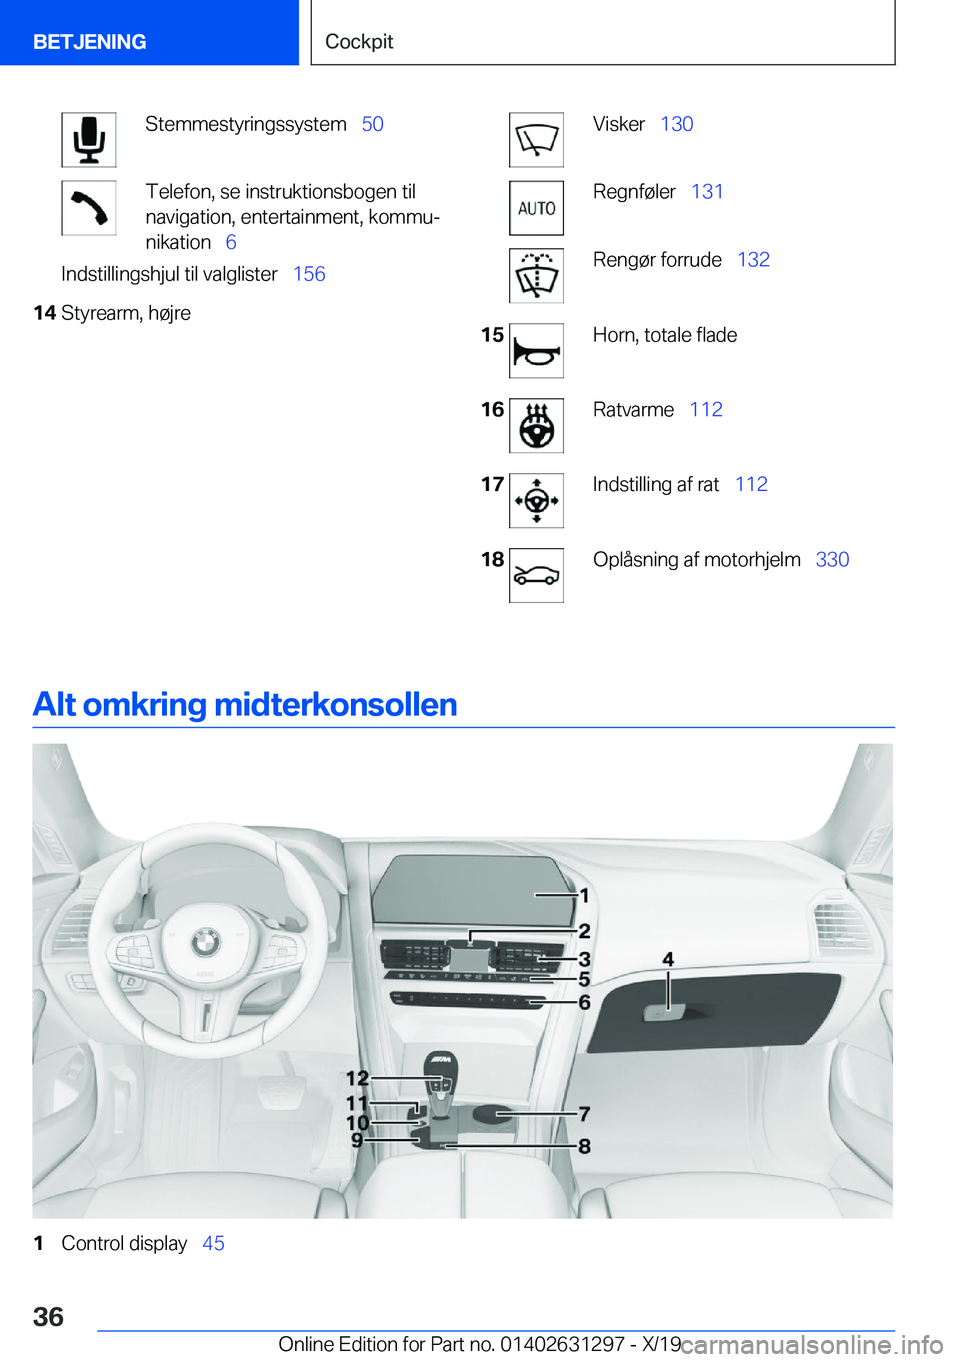 BMW M8 2020  InstruktionsbØger (in Danish) �S�t�e�m�m�e�s�t�y�r�i�n�g�s�s�y�s�t�e�m\_�5�0�T�e�l�e�f�o�n�,��s�e��i�n�s�t�r�u�k�t�i�o�n�s�b�o�g�e�n��t�i�l
�n�a�v�i�g�a�t�i�o�n�,��e�n�t�e�r�t�a�i�n�m�e�n�t�,��k�o�m�m�uj
�n�i�k�a�t�i�o�n\